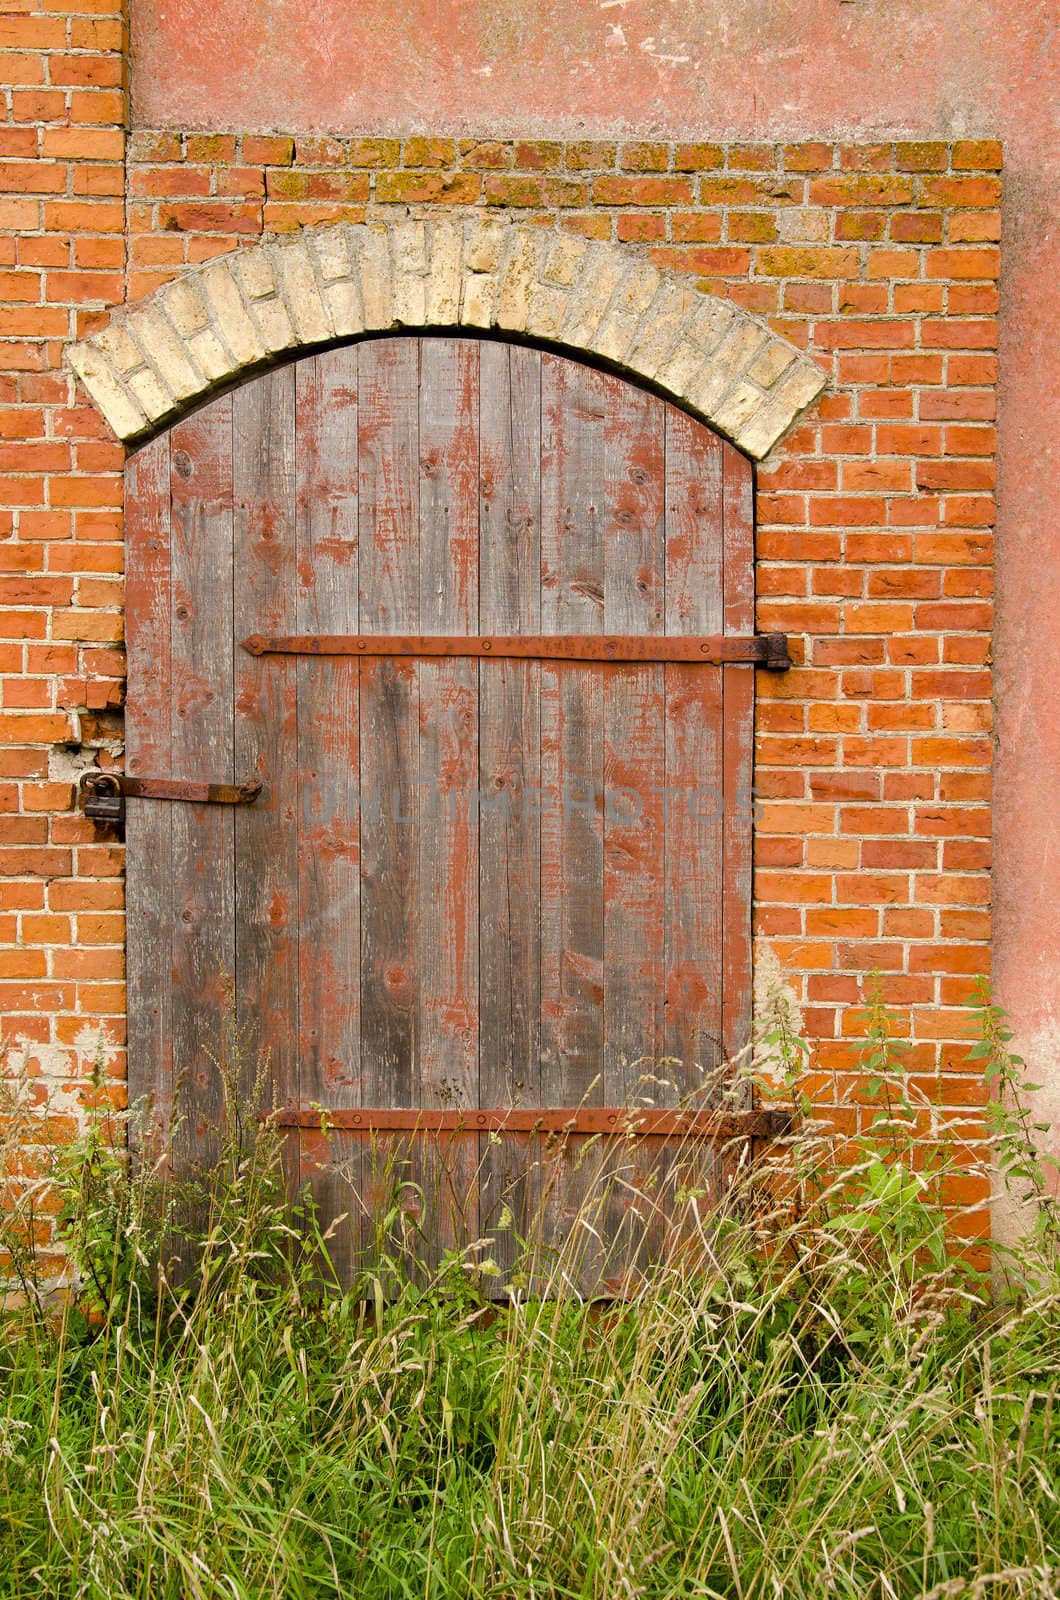 Abandoned farm house door lock red brick building by sauletas